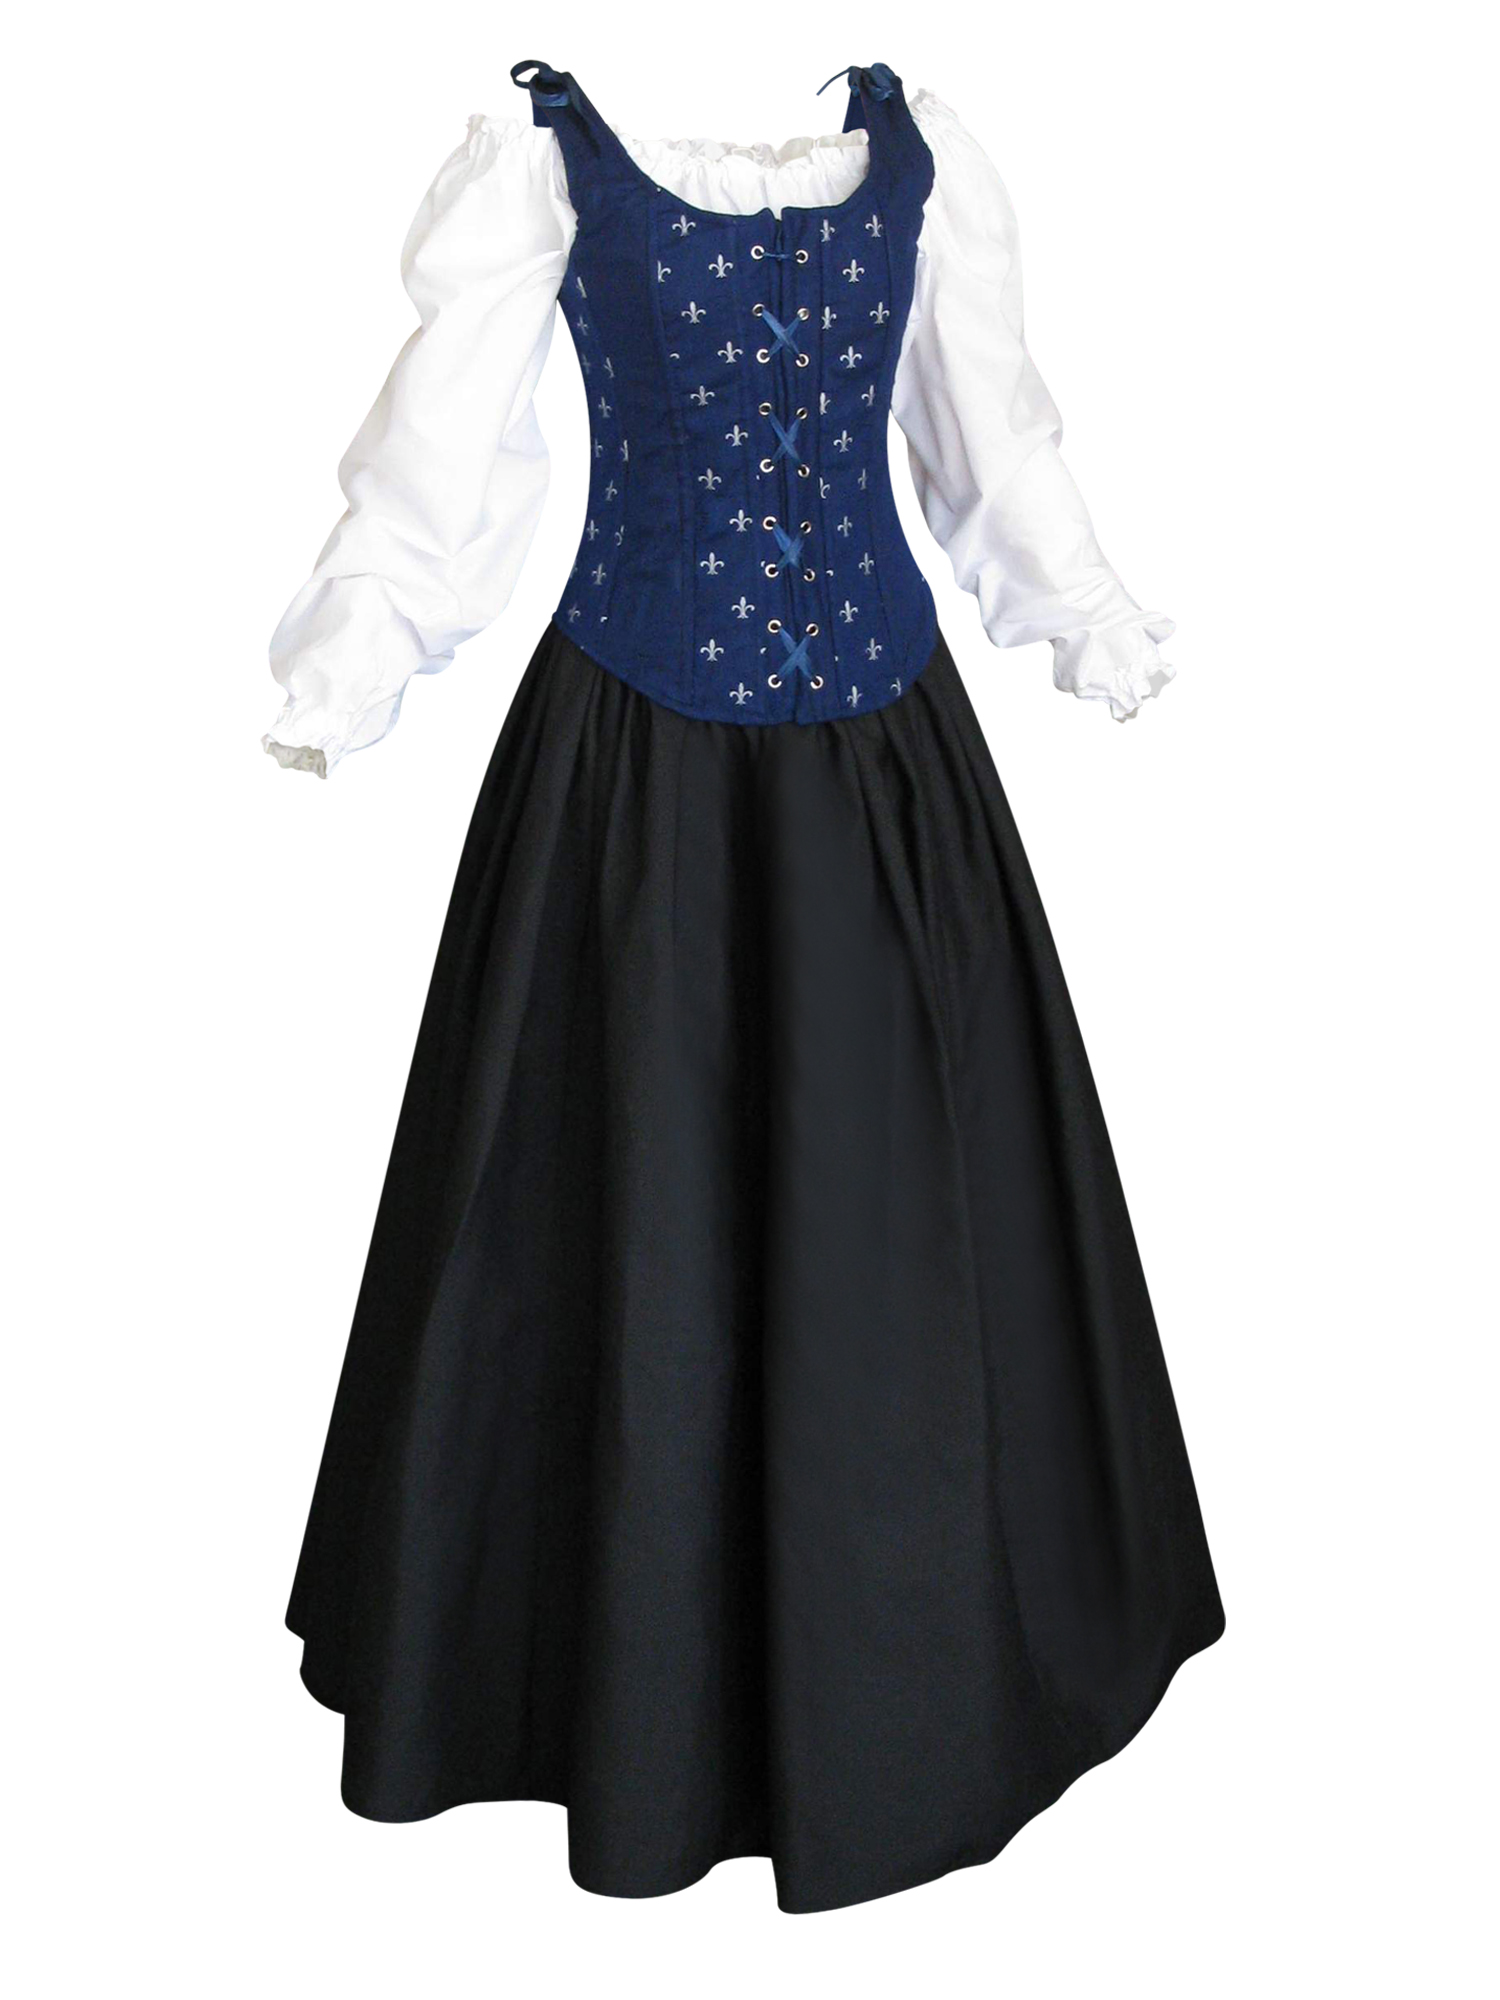 Renaissance maiden/wench dress - Bodice Skirt Corset Costume.